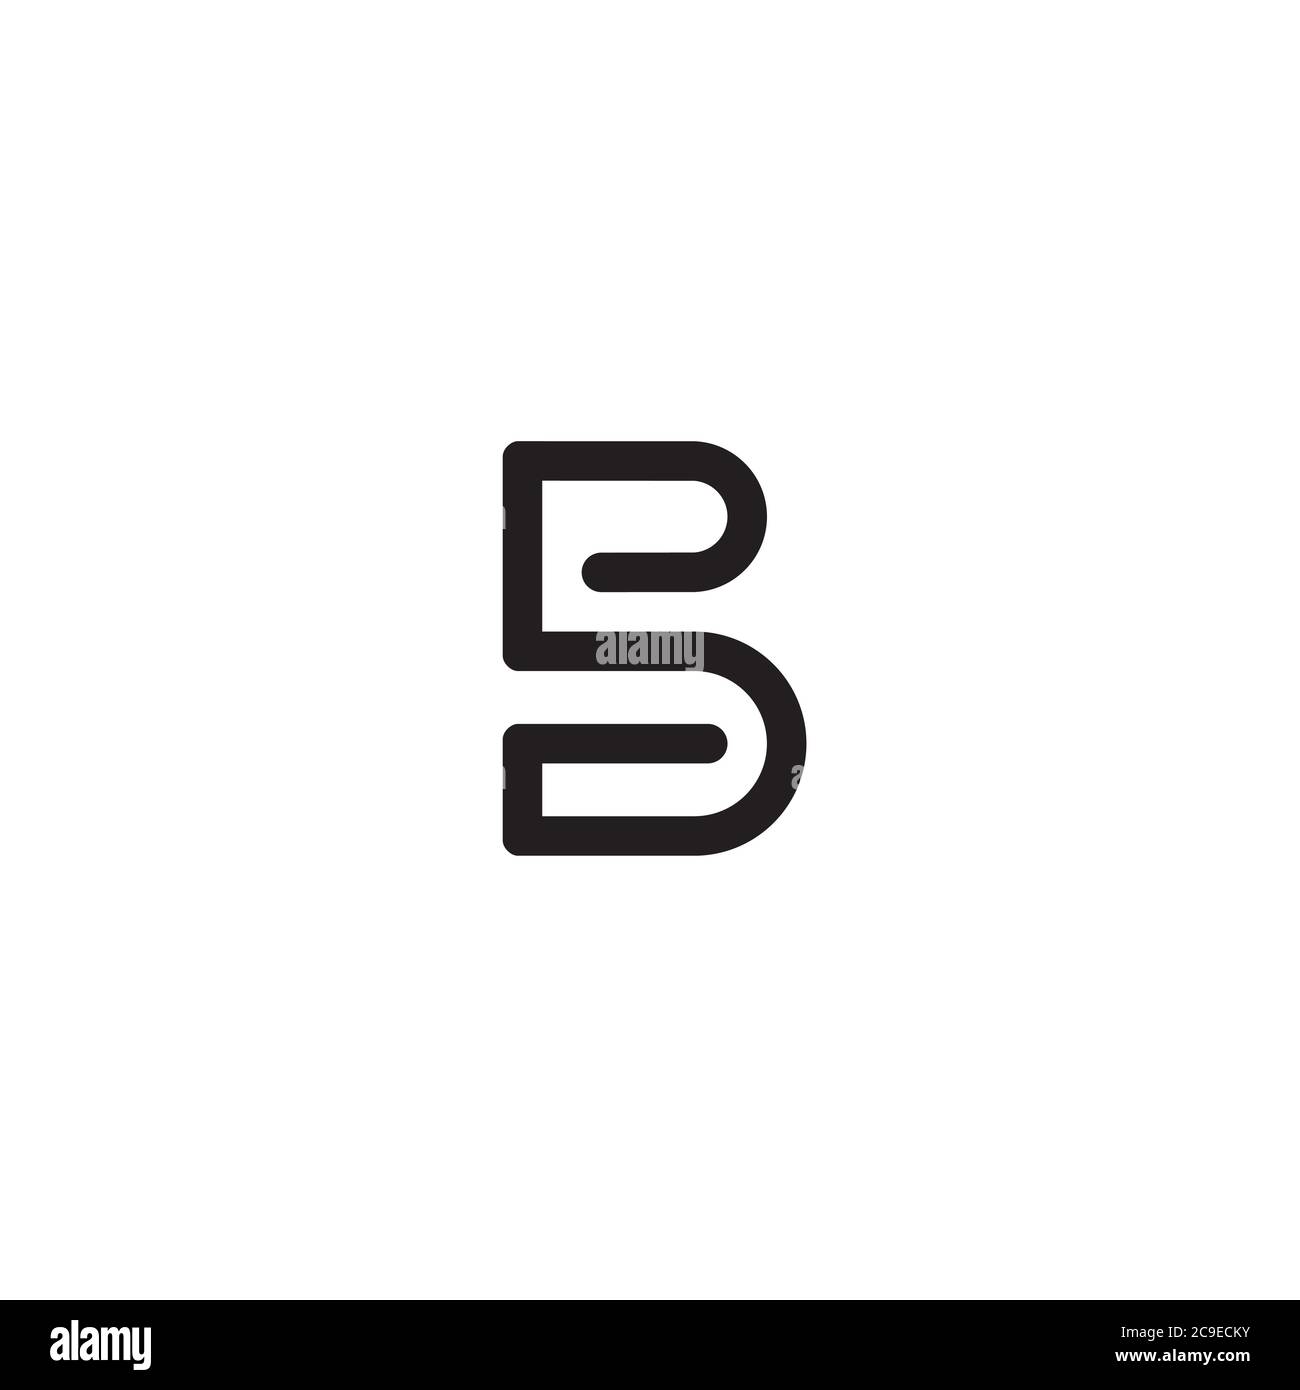 Letter B logo / icon design Stock Vector